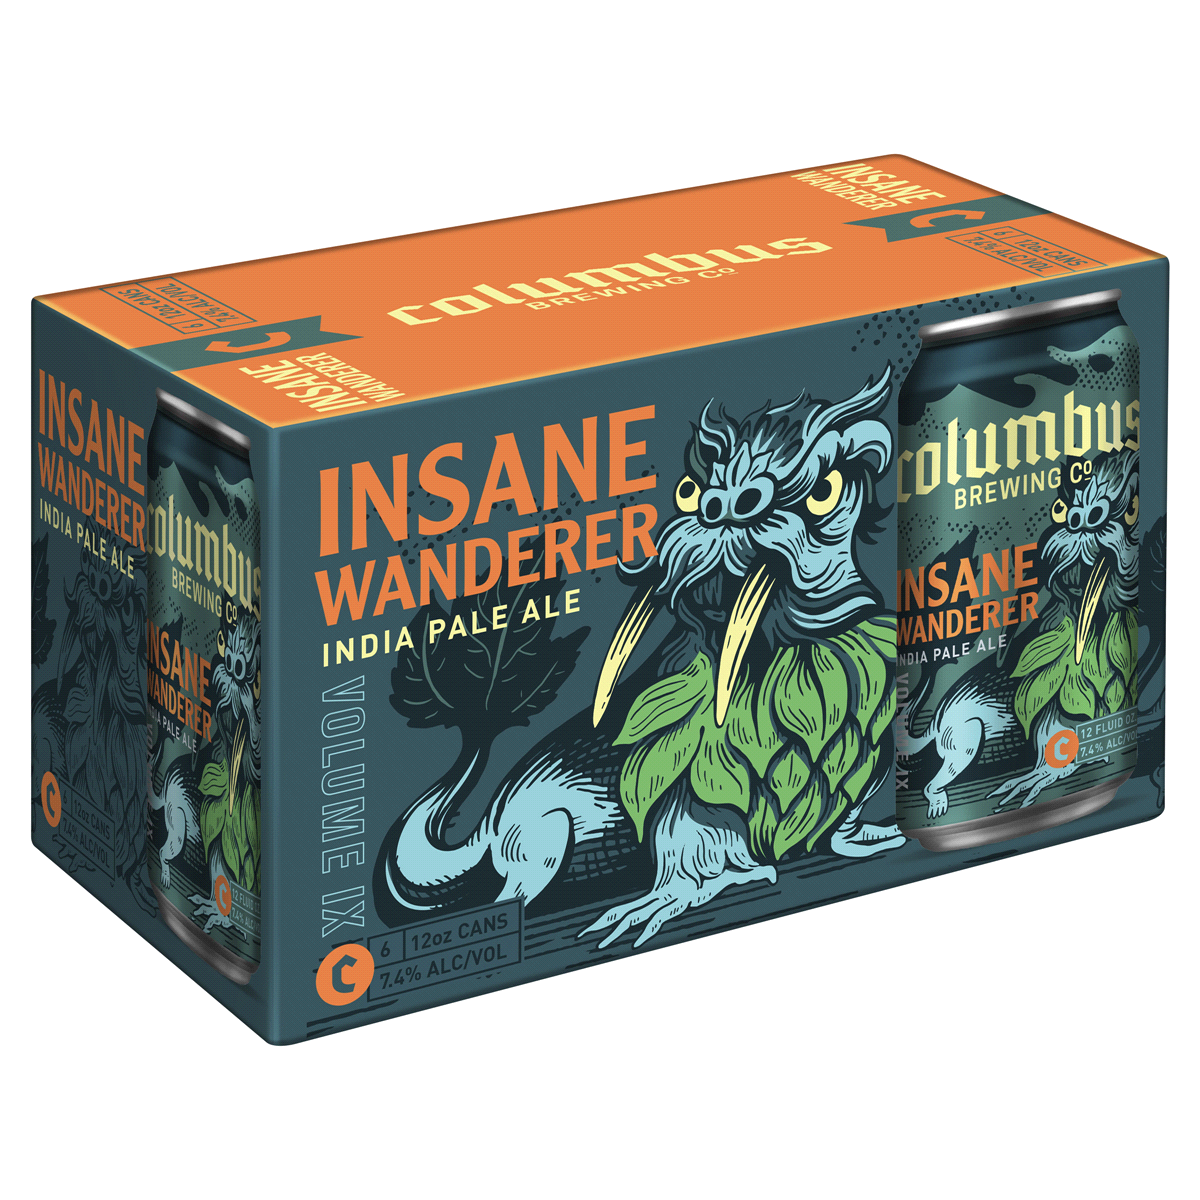 images/beer/IPA BEER/Columbus Insane Wanderer Volume IX.png